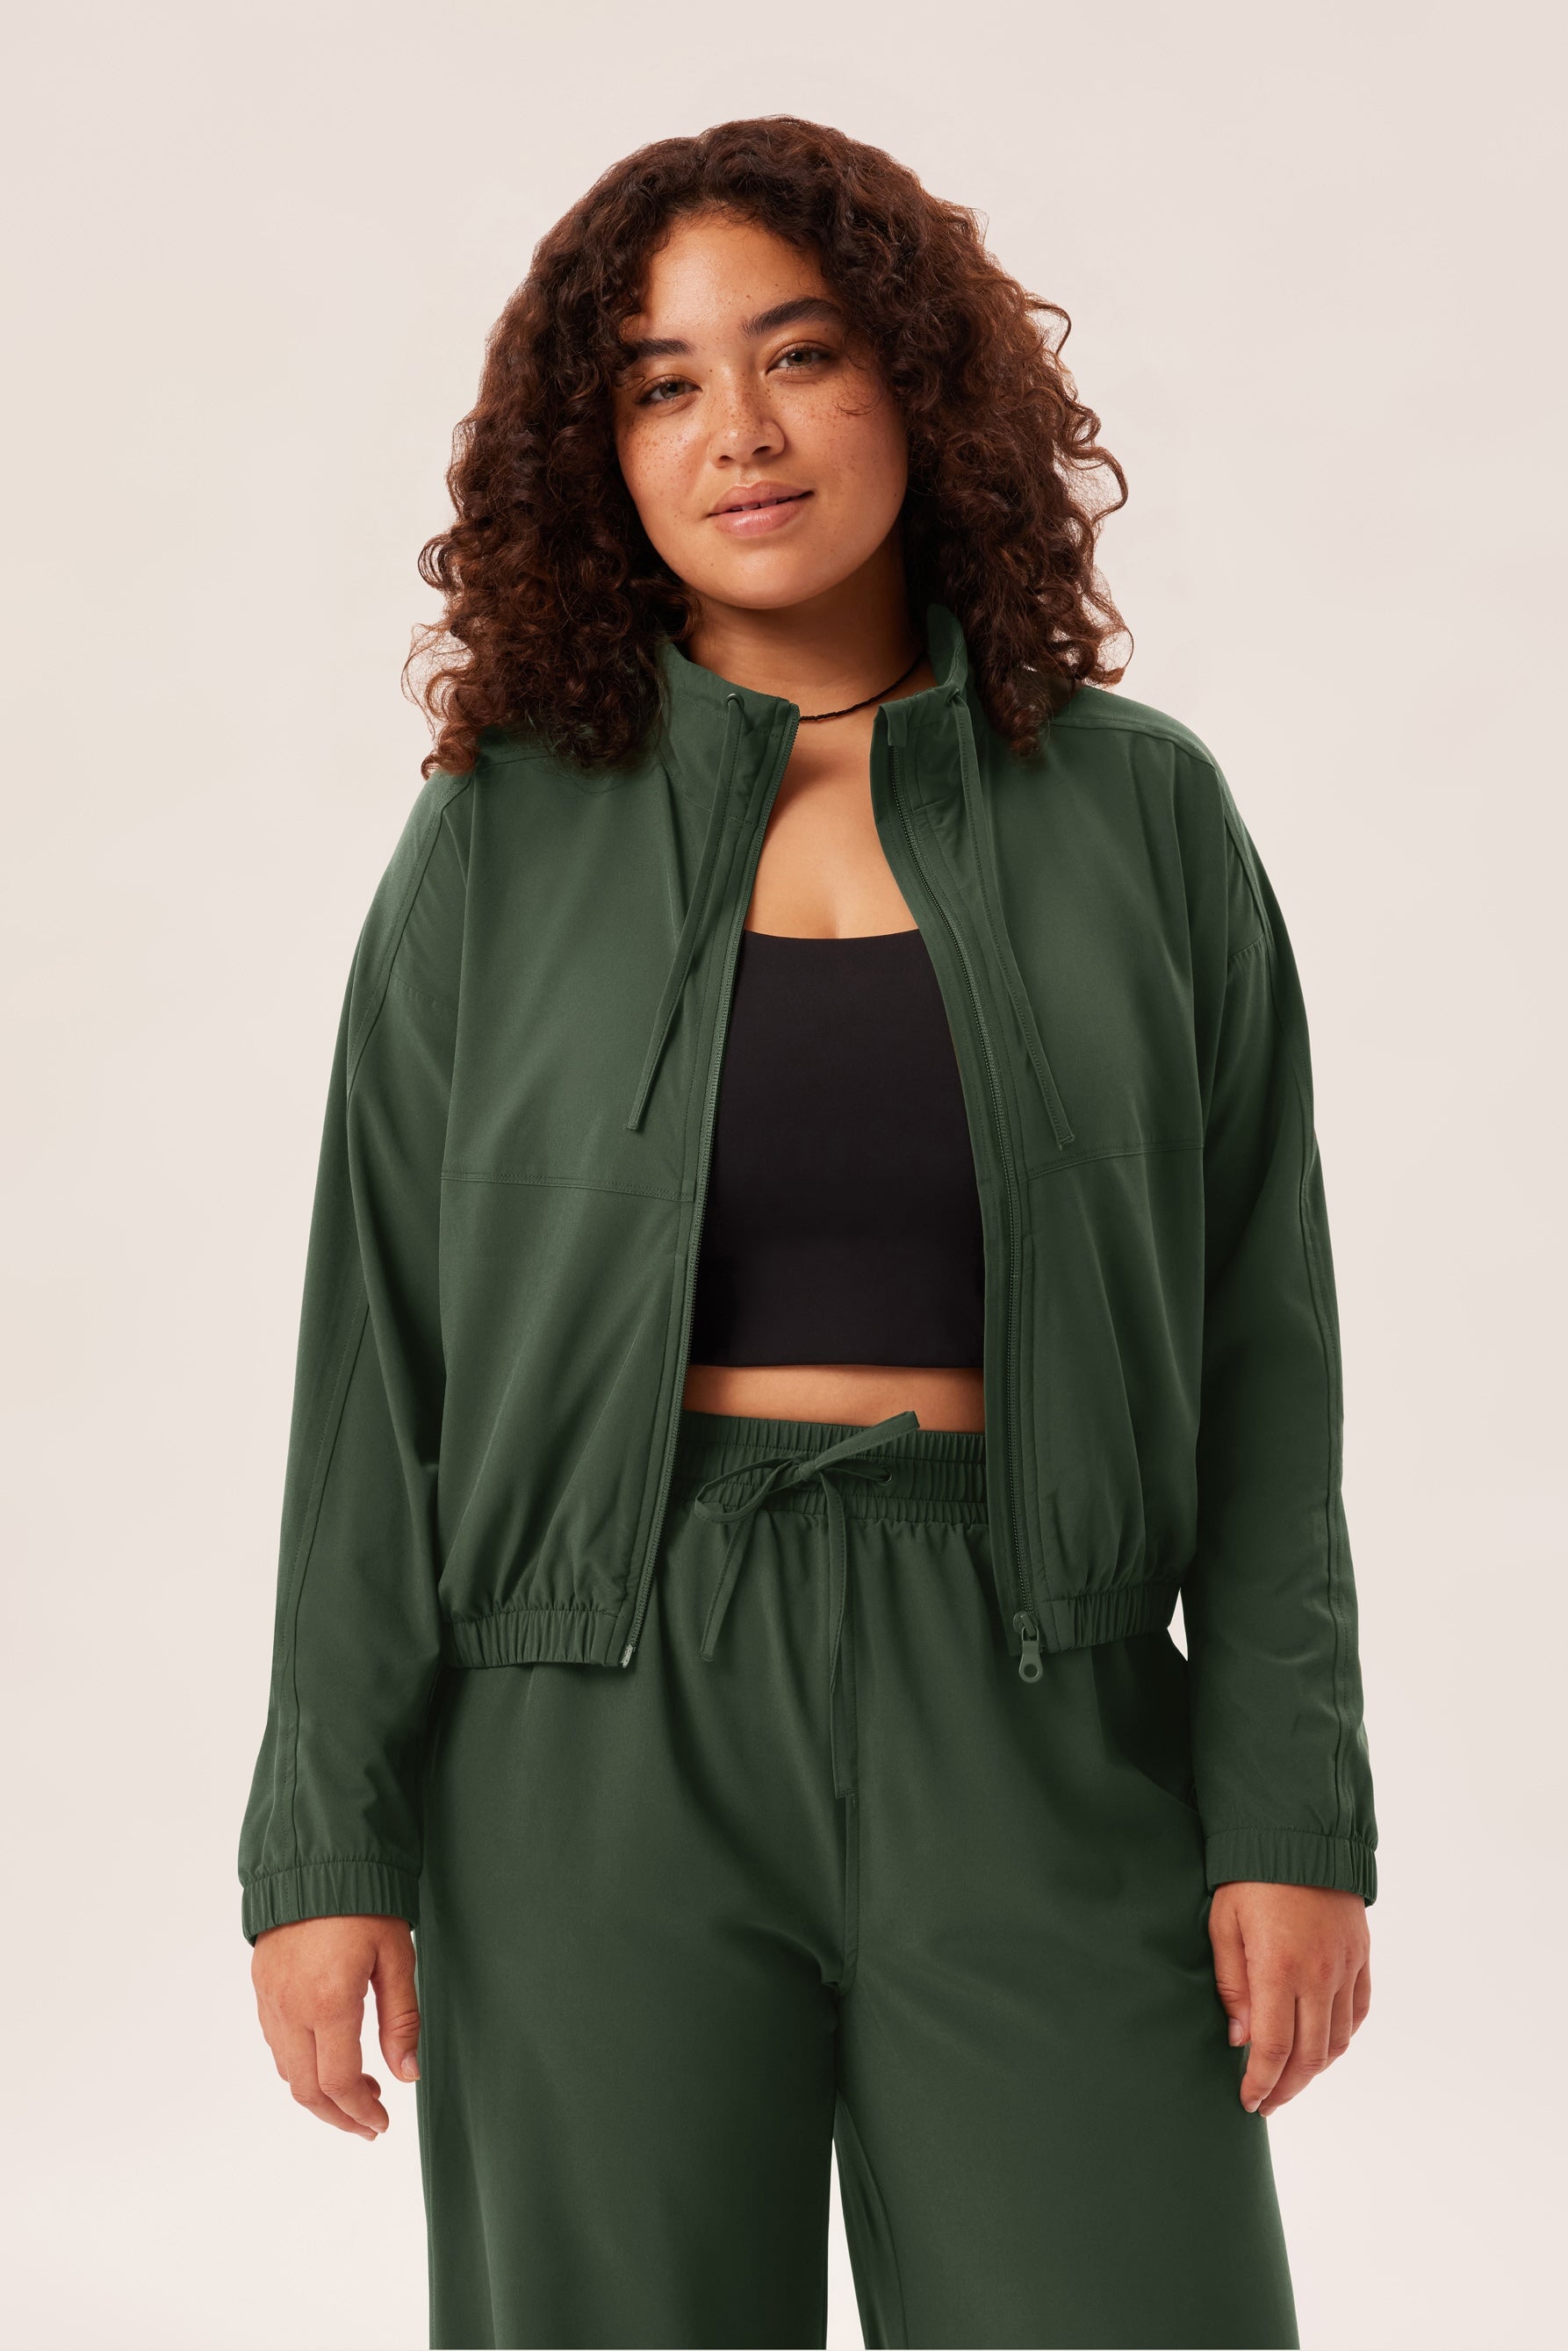 Nike Sportswear Icon Clash Women's Jacket (Barely Green) Size Small